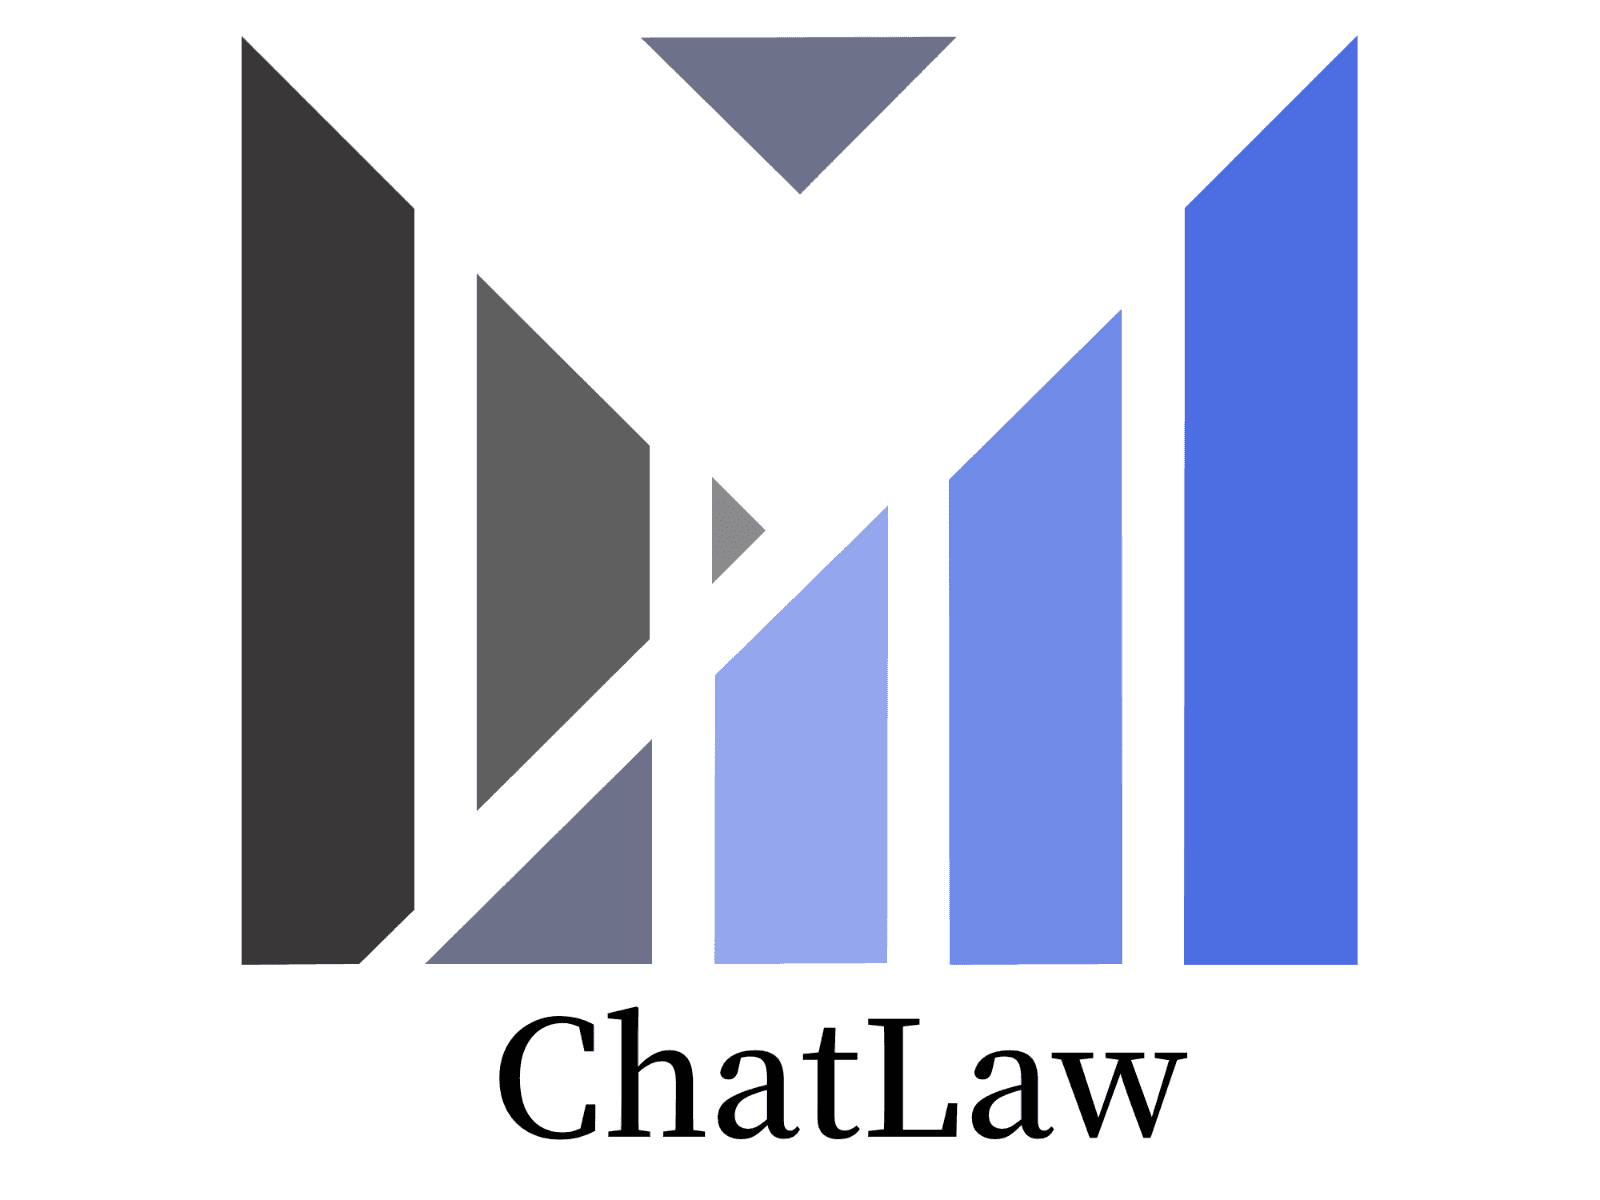 ChatLaw 法律 AI 大模型